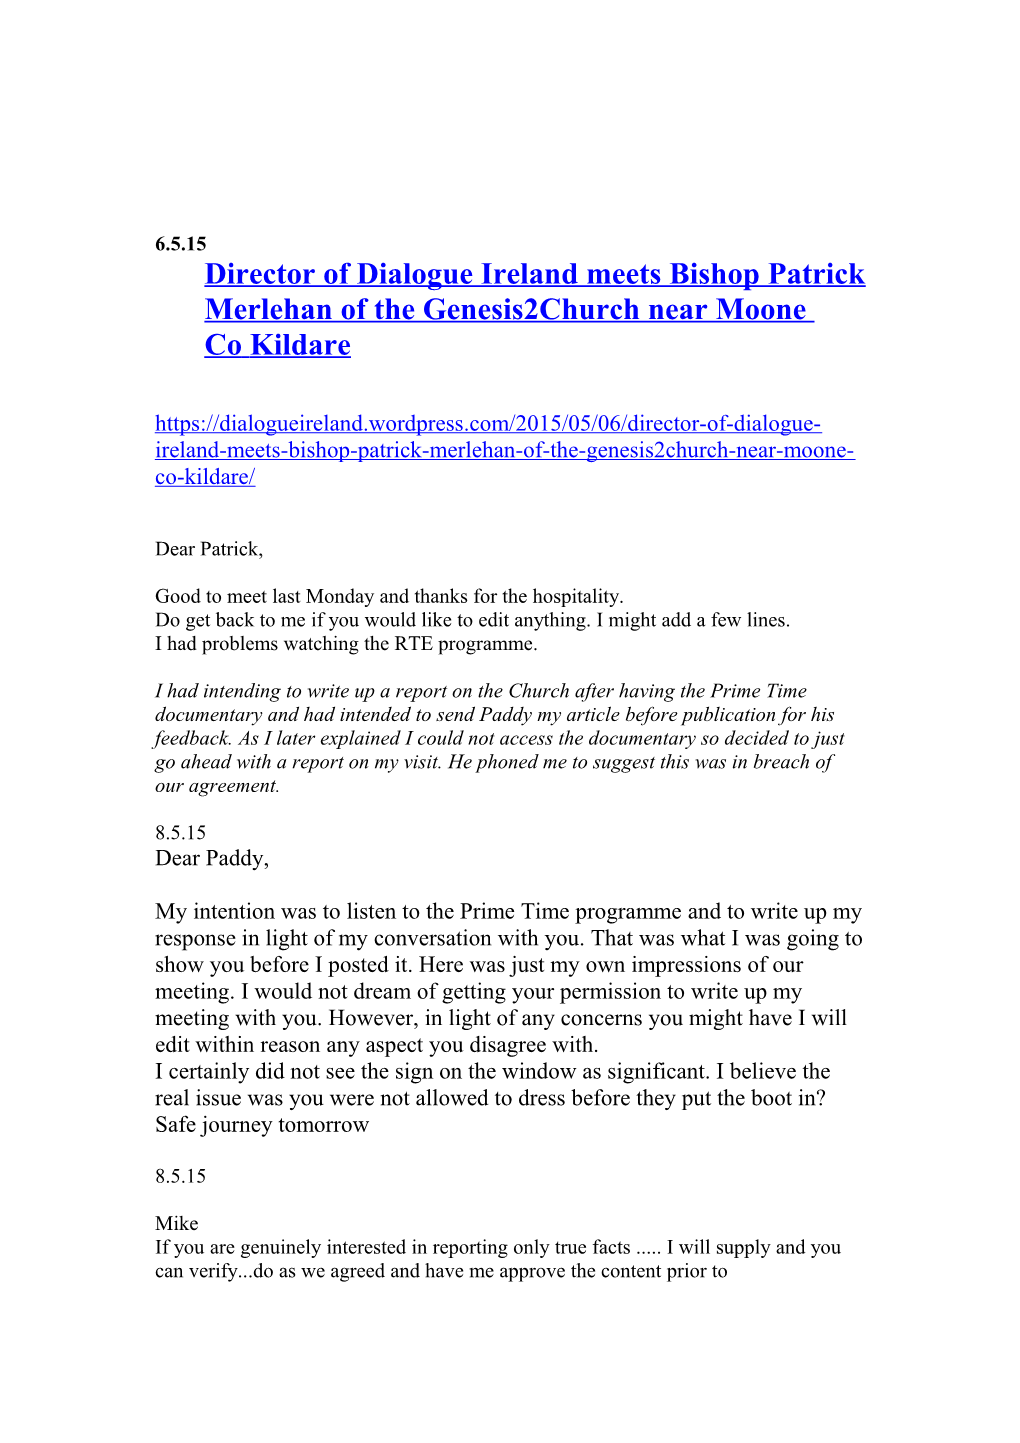 6.5.15Director of Dialogue Ireland Meets Bishop Patrick Merlehan of the Genesis2church